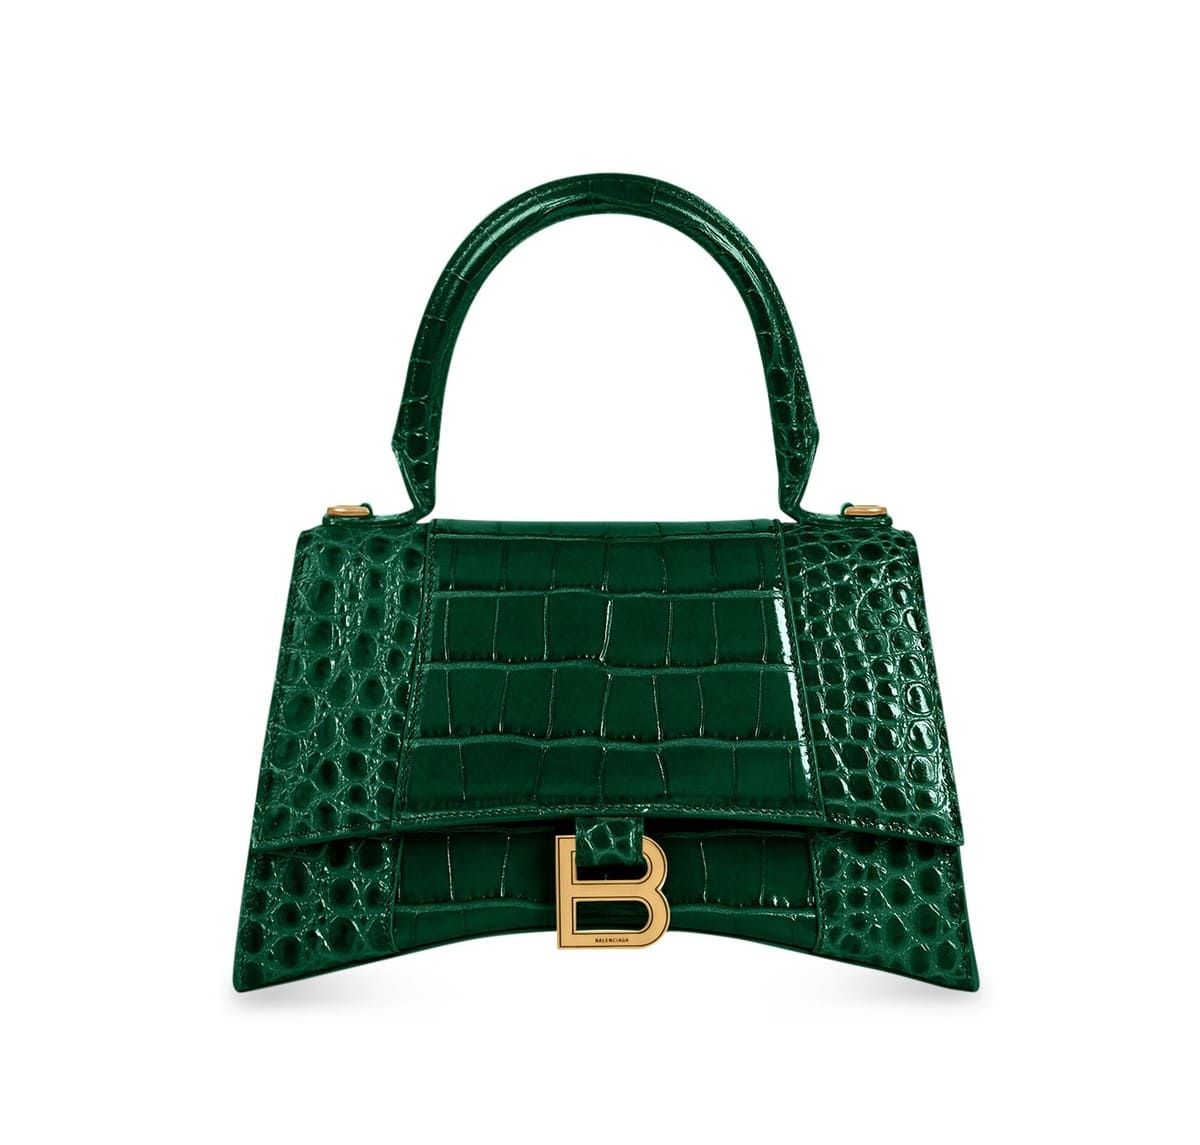 Balenciaga Hourglass Small Bag in Croc Embossed green